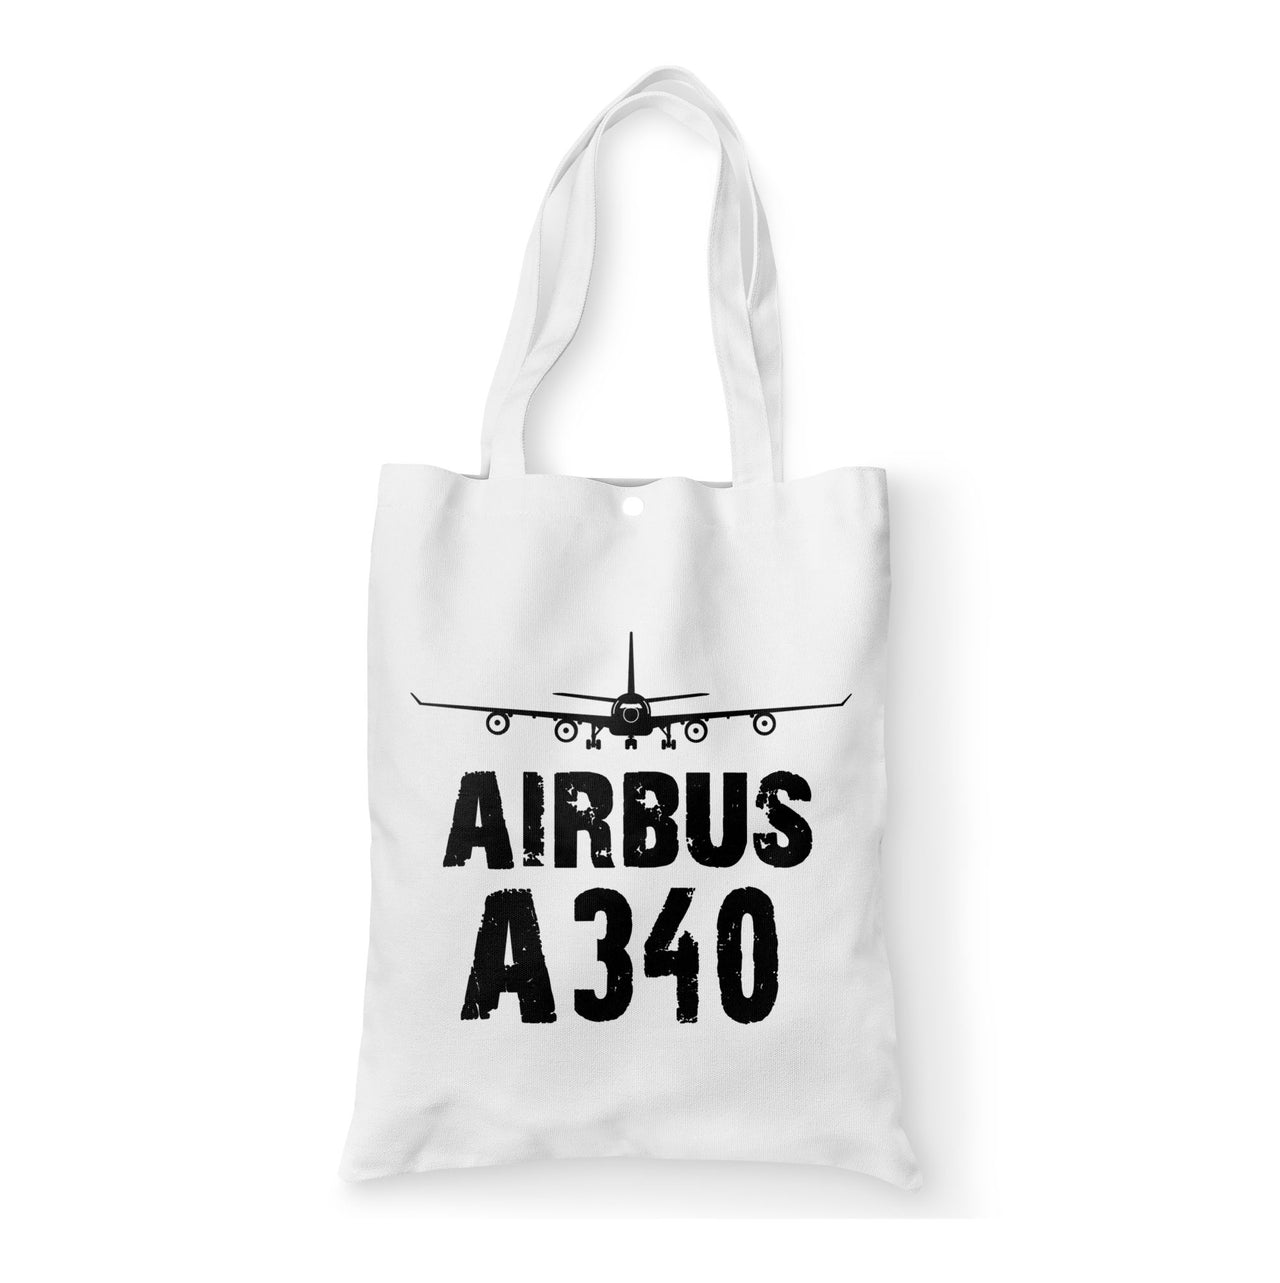 Airbus A340 & Plane Designed Tote Bags